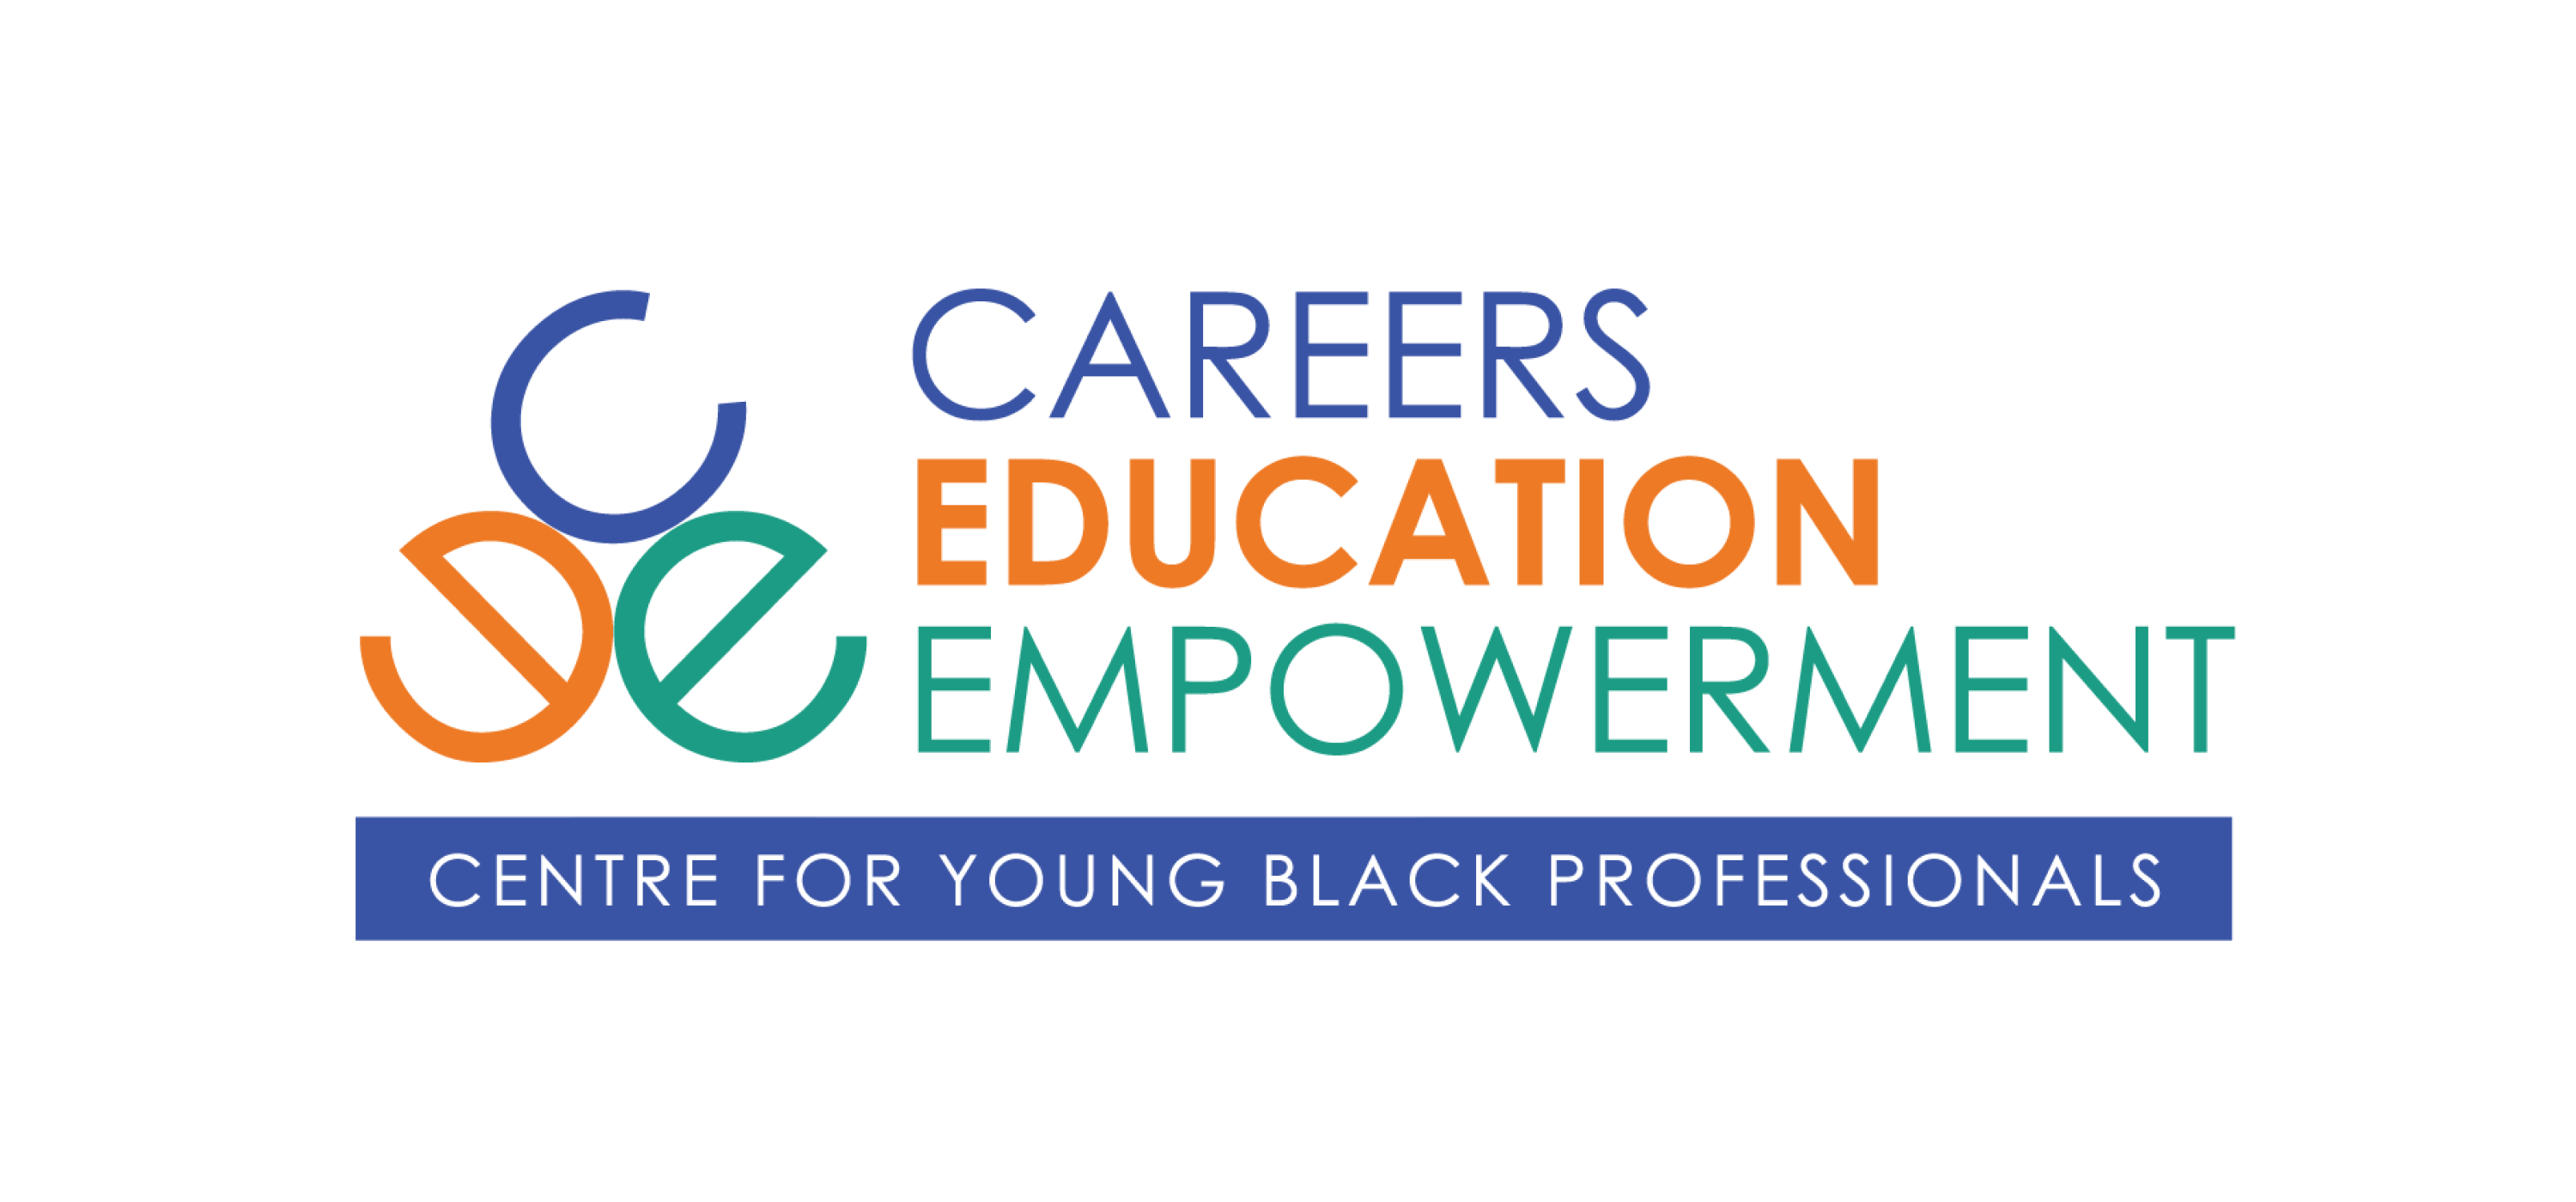 careers education empowerment logo